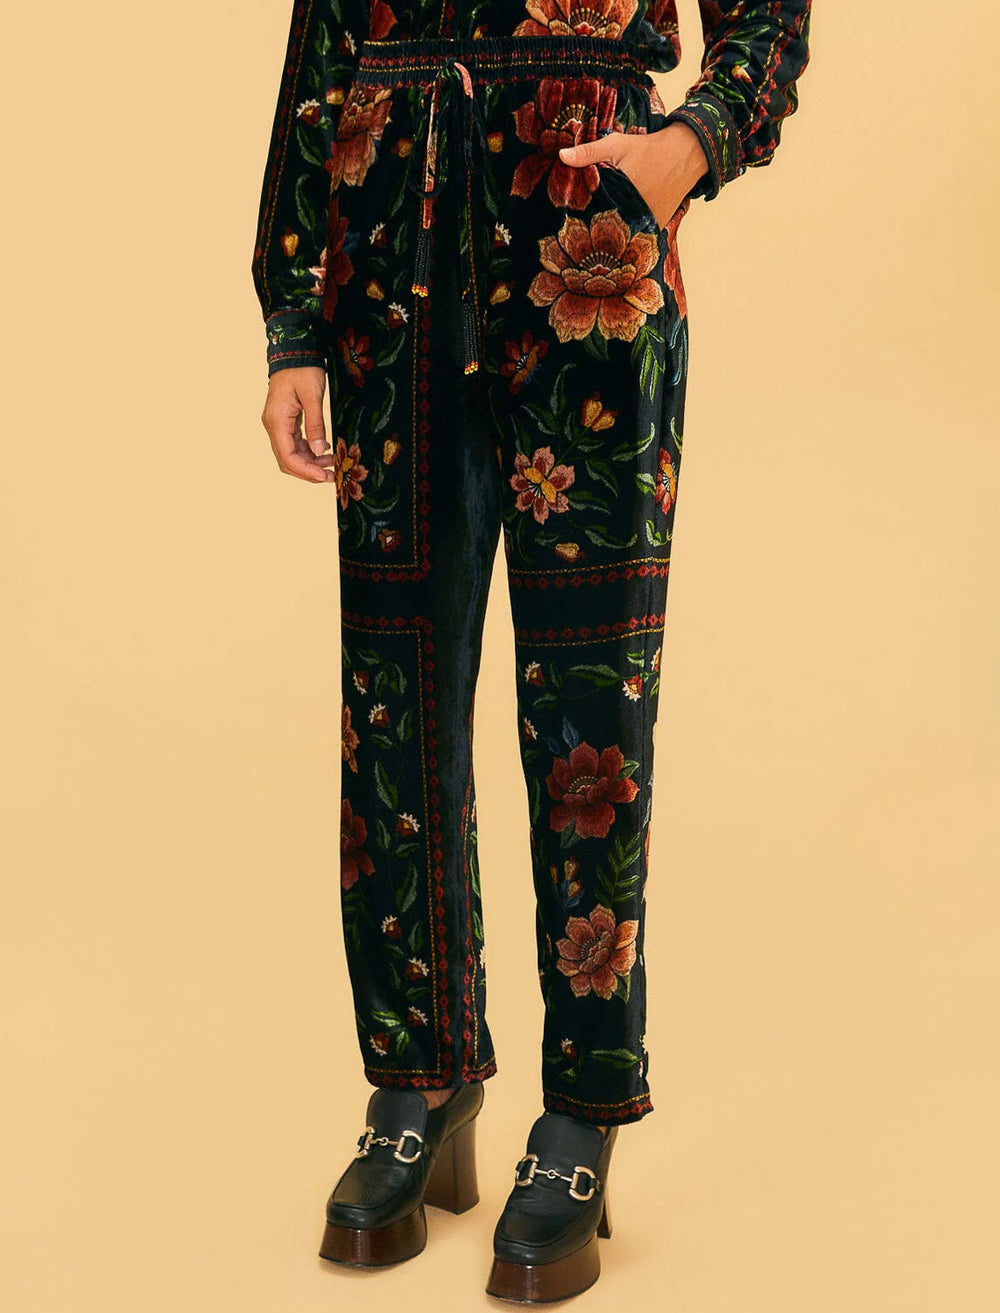 LOUIS VUITTON  Wonderland Flat Ranger – DRESS MOOD CLOTHING